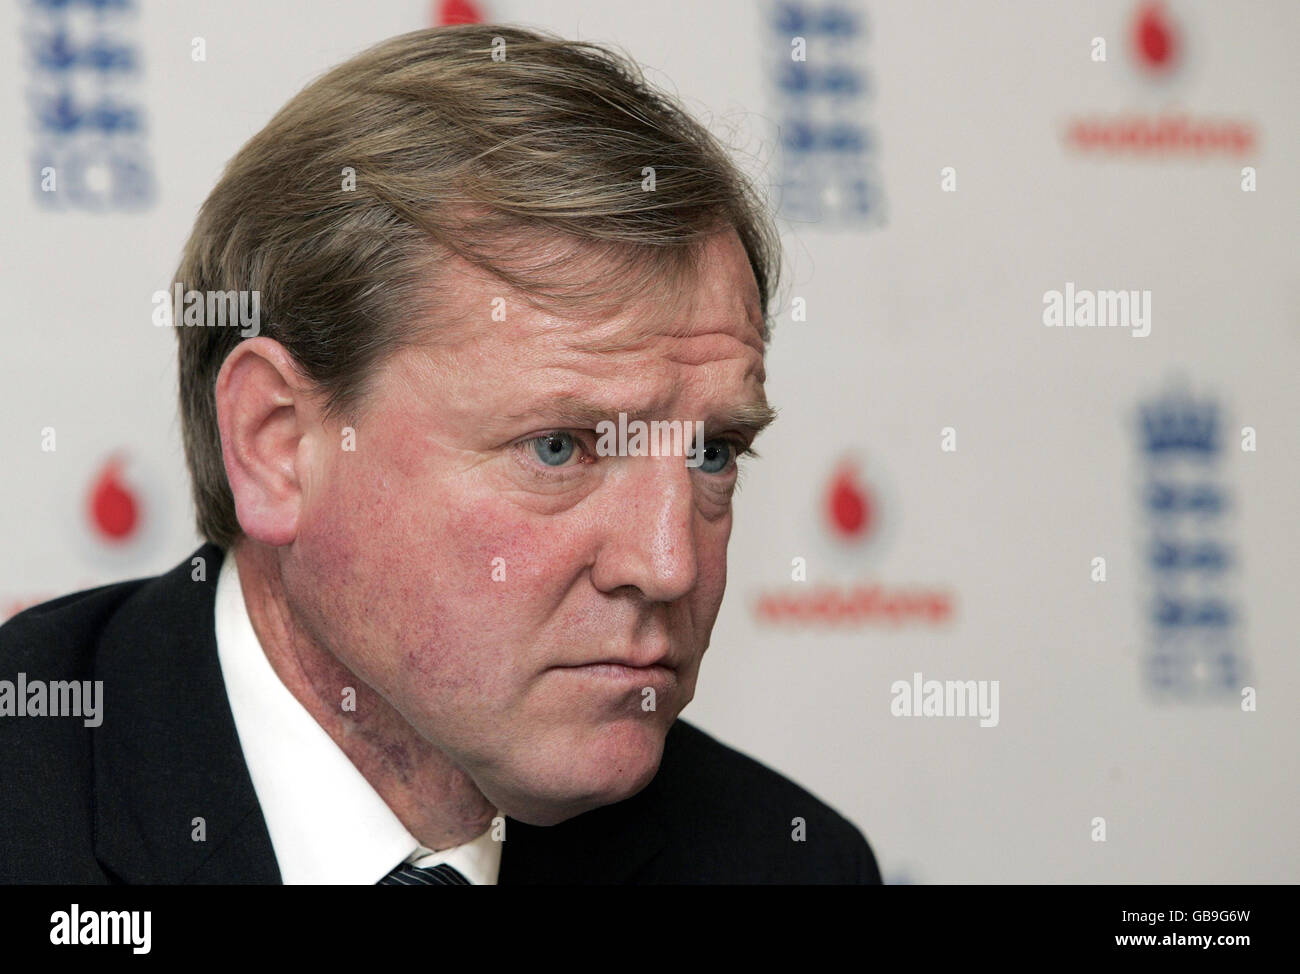 Cricket - England Press Conference - Hilton Hotel Stock Photo